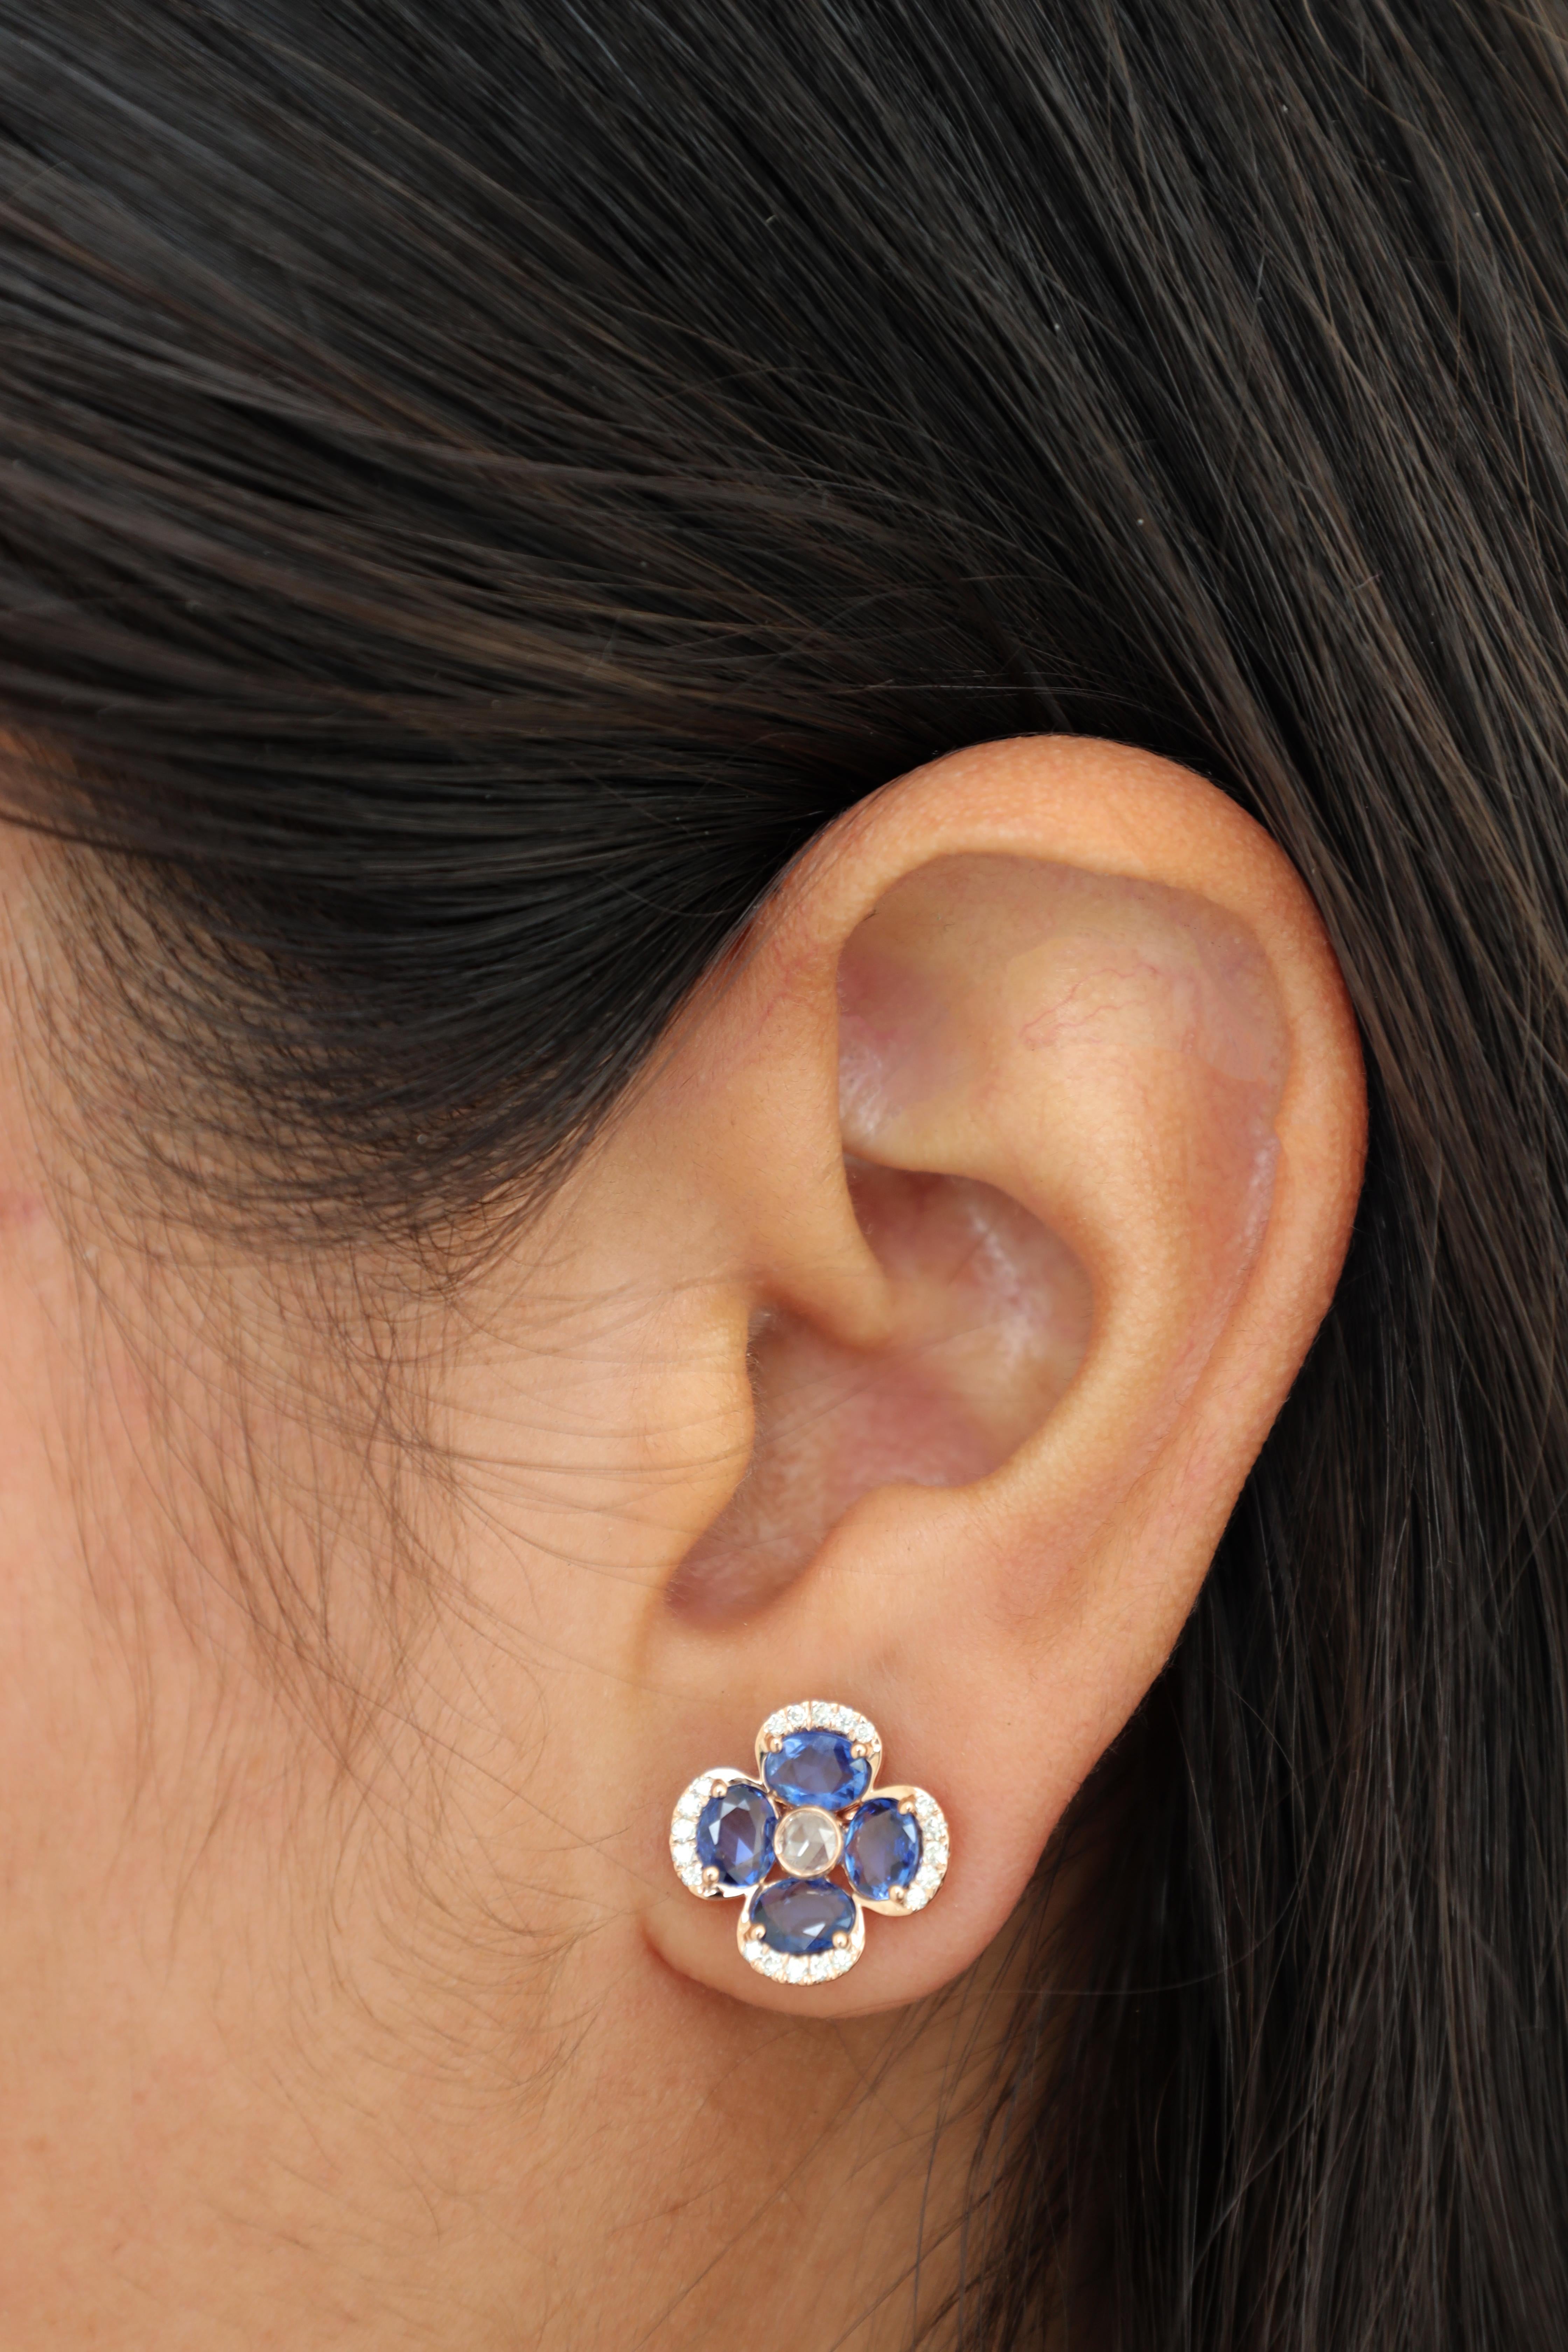 Oval Cut 2.71 Carat Blue Sapphire, Rose cut & Round Diamond Earrings Studs. For Sale